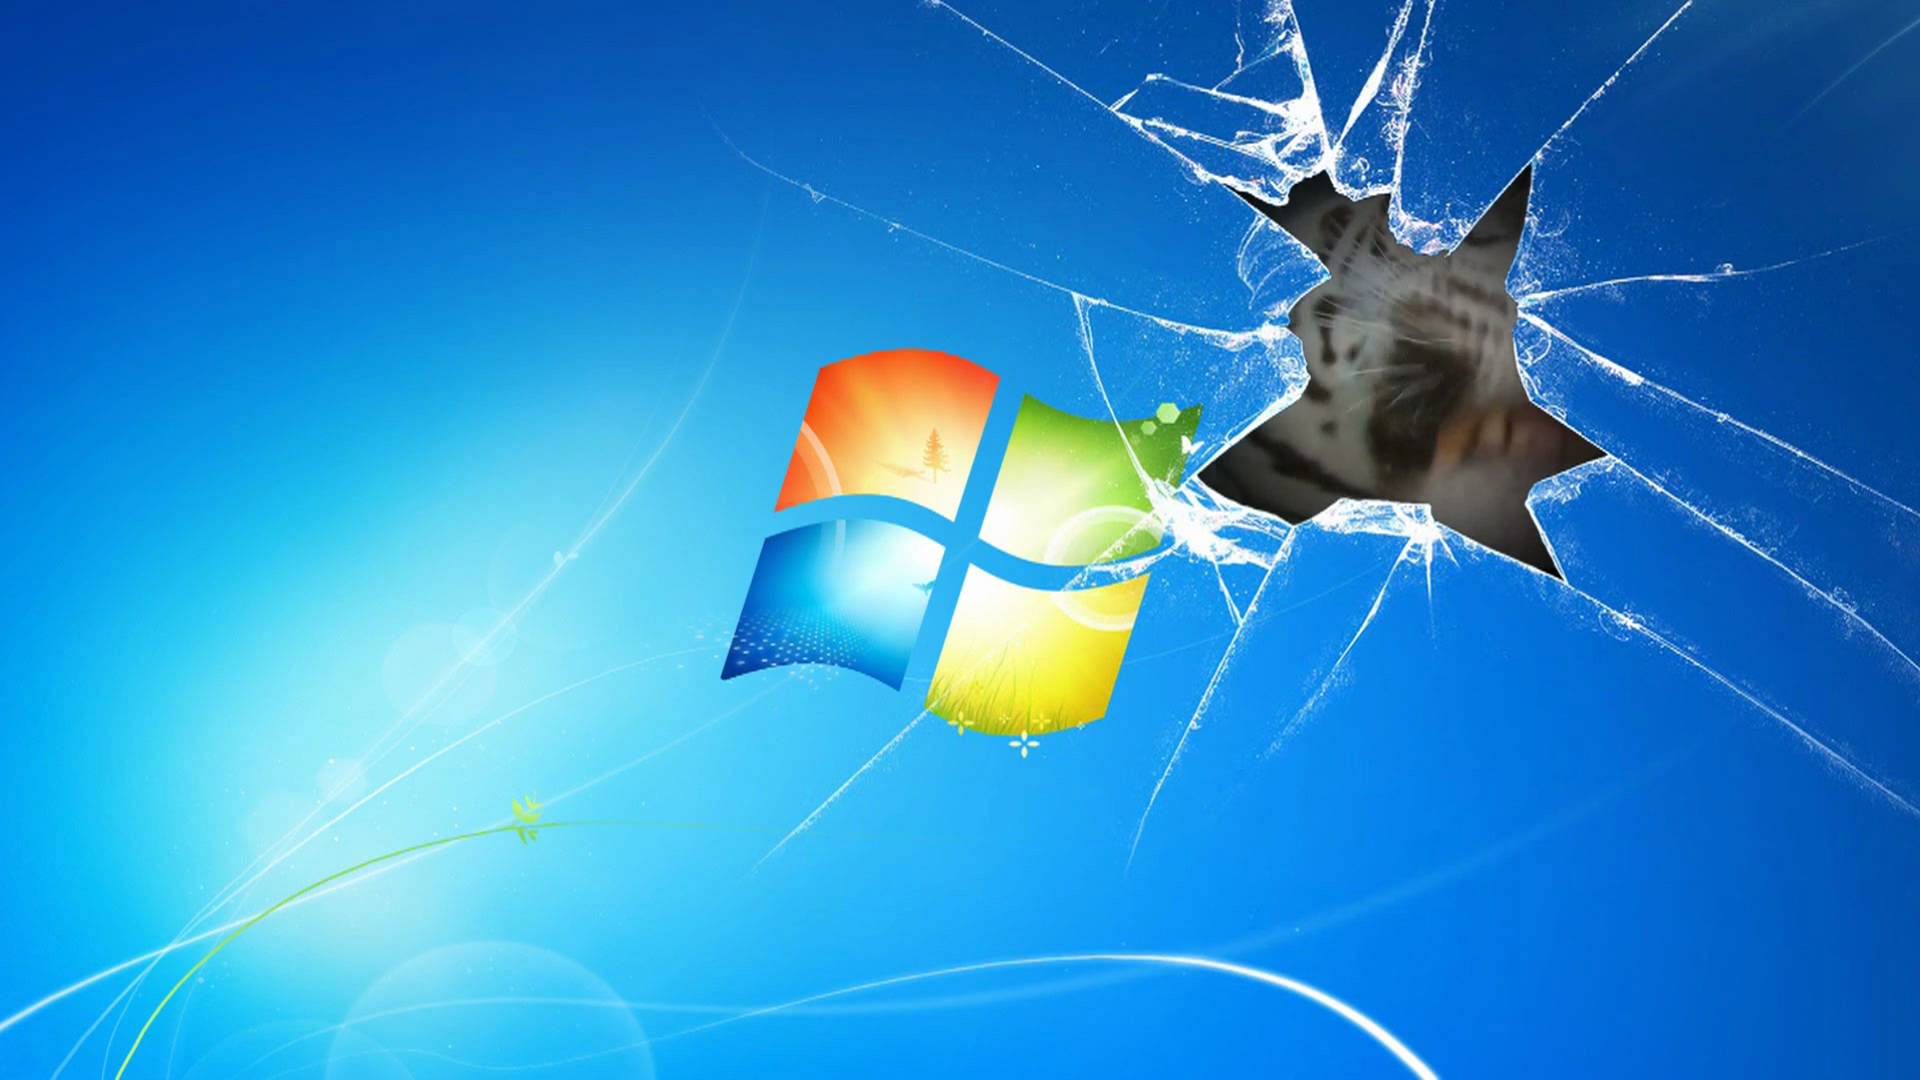 Windows 7 Wallpaper Animated Tiger on broken screen - YouTube